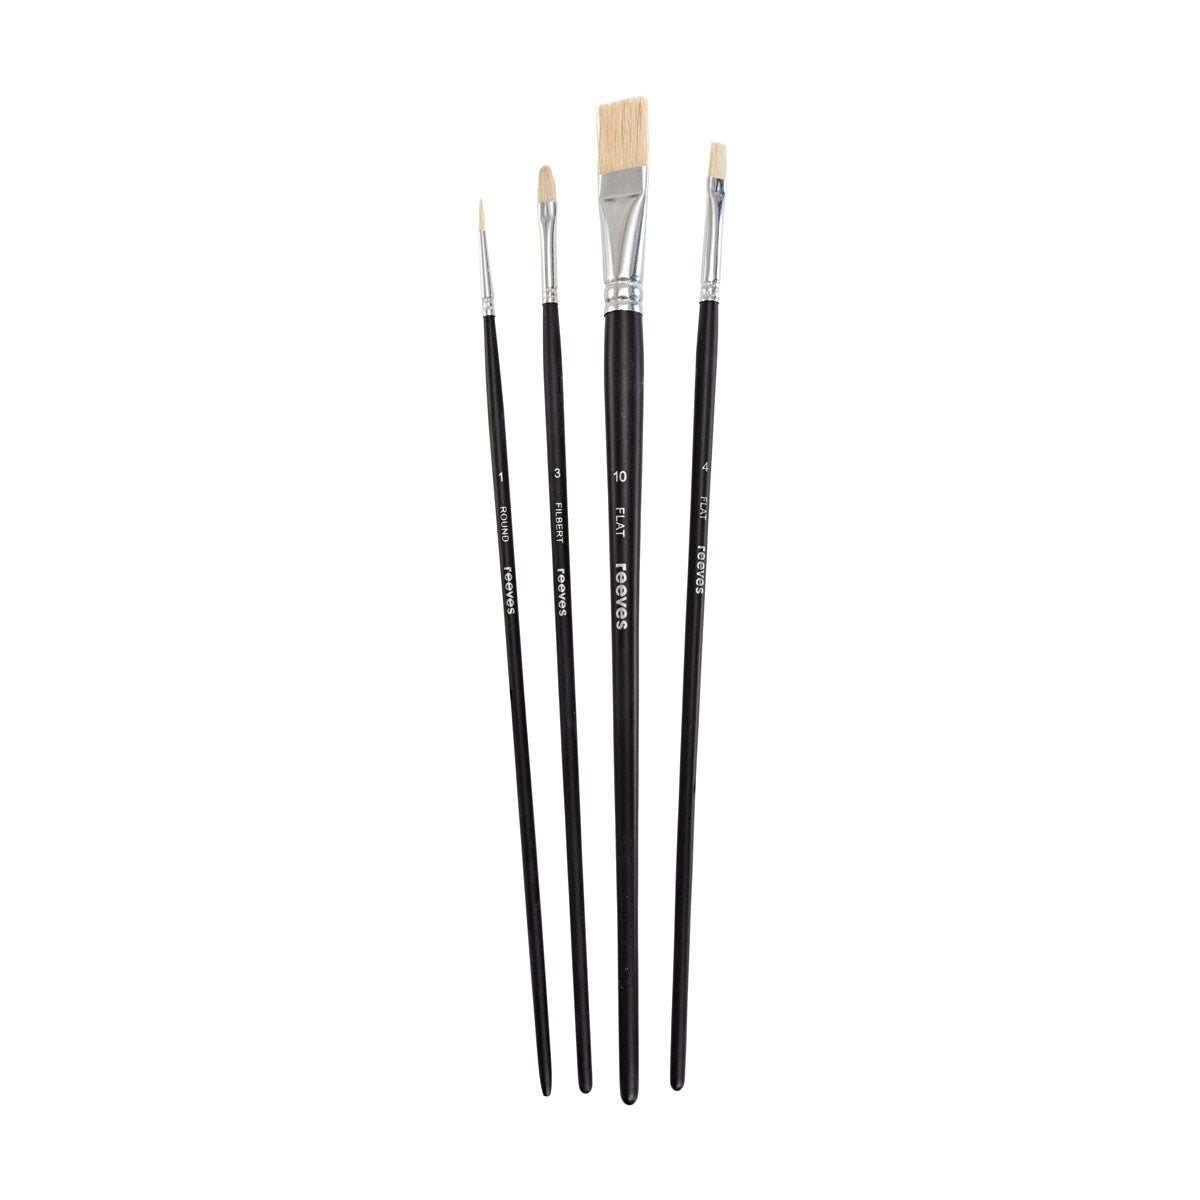 Reeves - Hog Oil Brush set - Long Handle - 4x Brush Pack